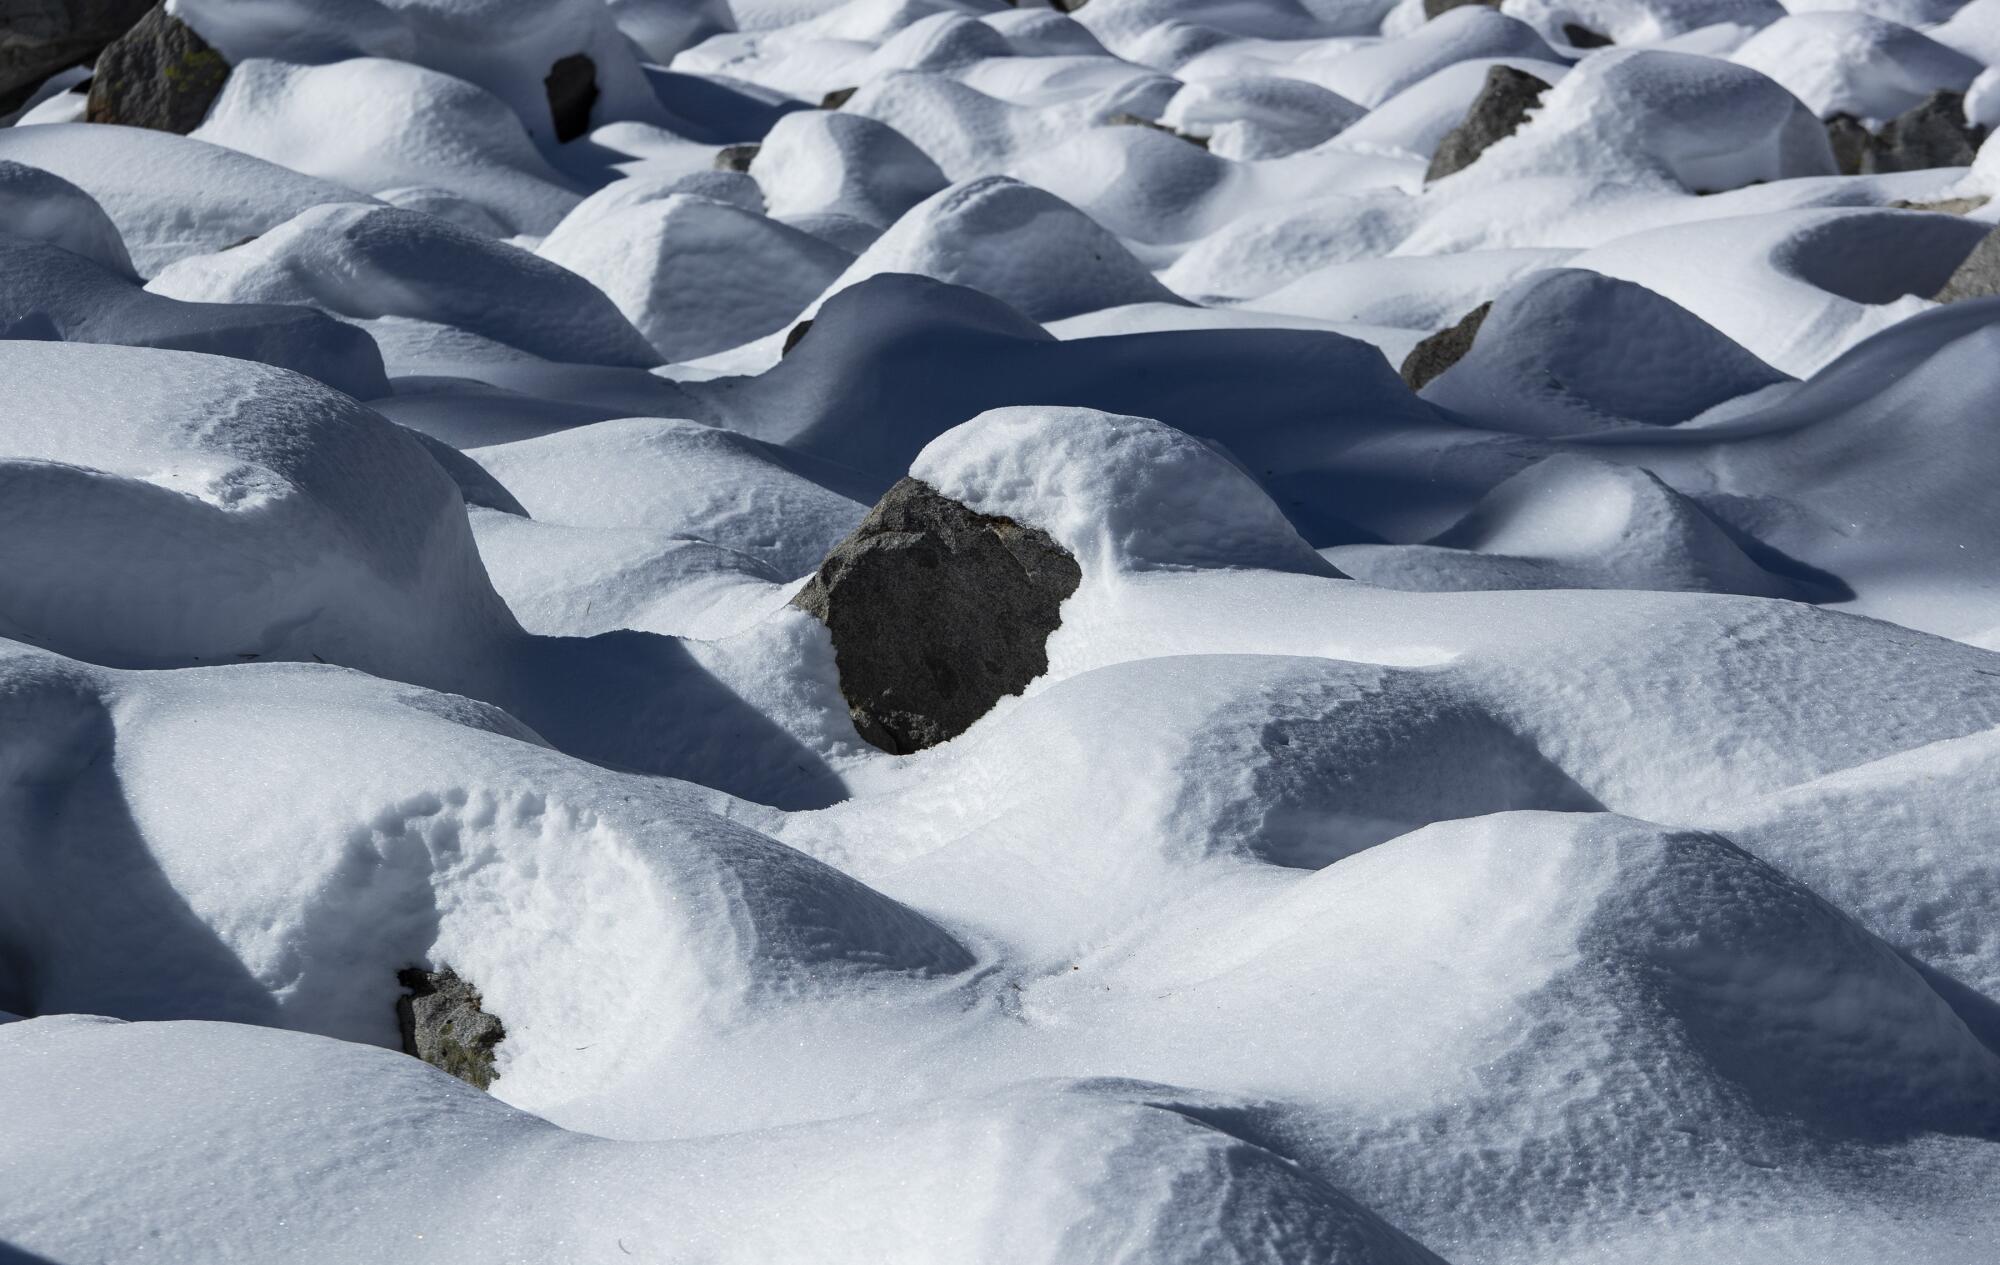 Snowy boulders